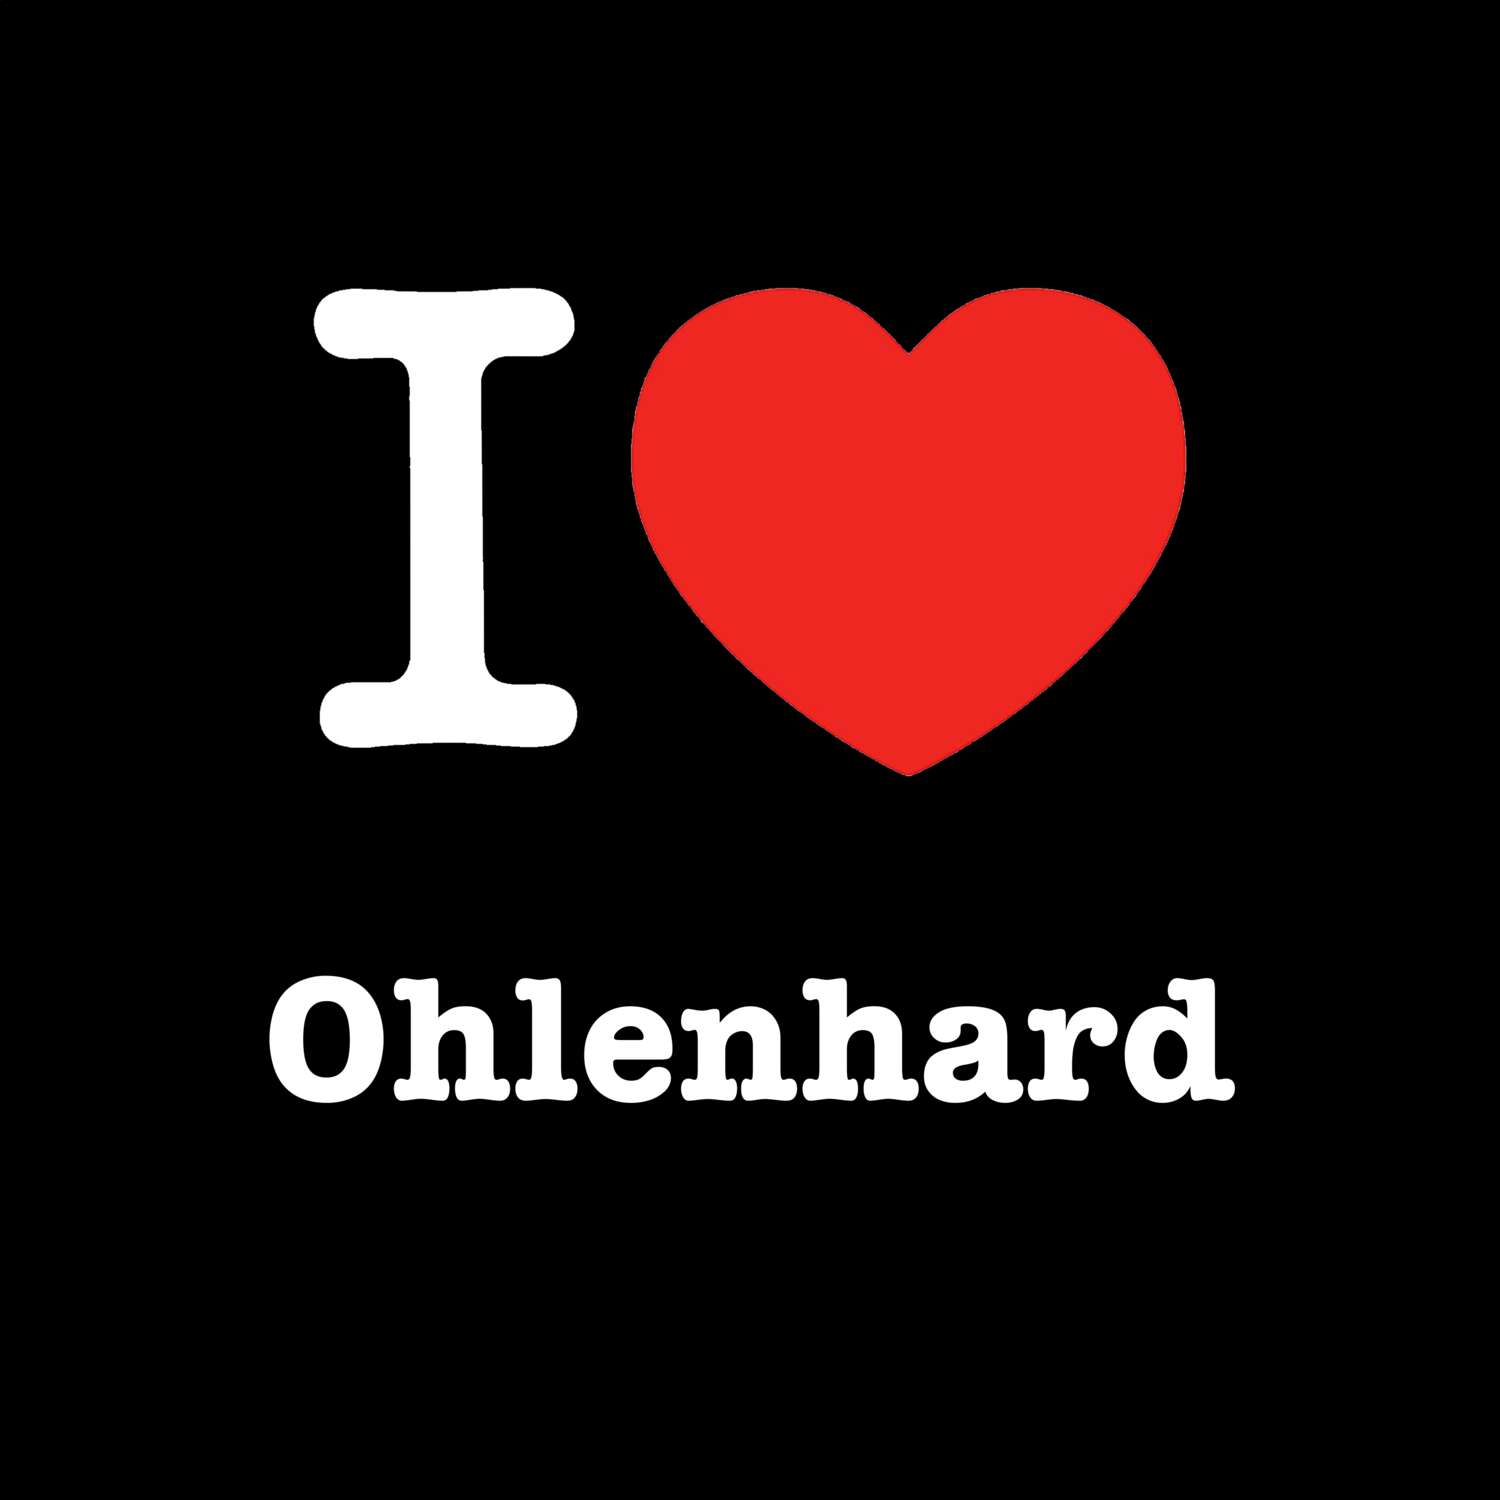 Ohlenhard T-Shirt »I love«